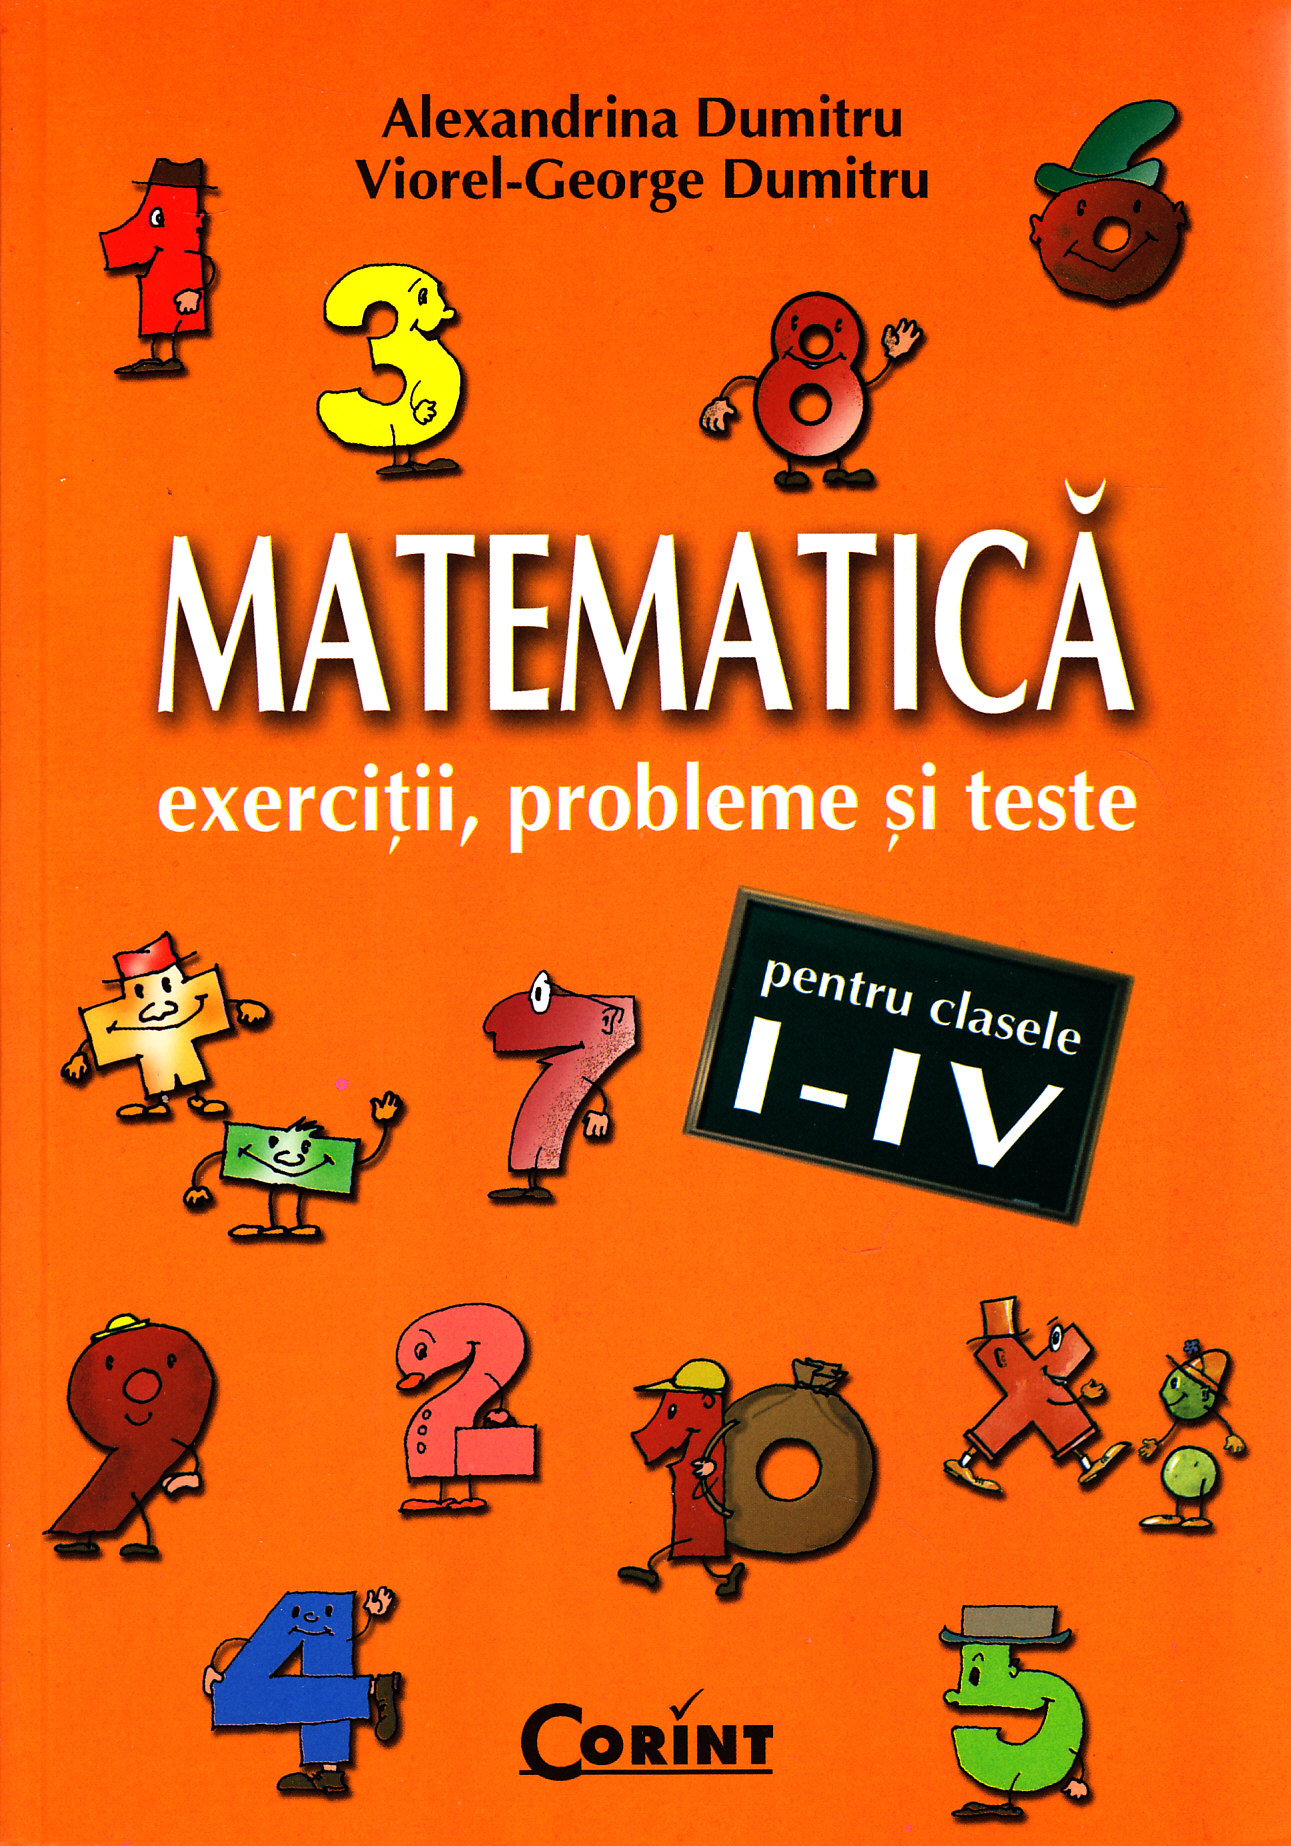 Matematica clasa 1-4 - Exercitii, probleme si teste - Alexandrina Dumitru, Viorel-George Dumitru